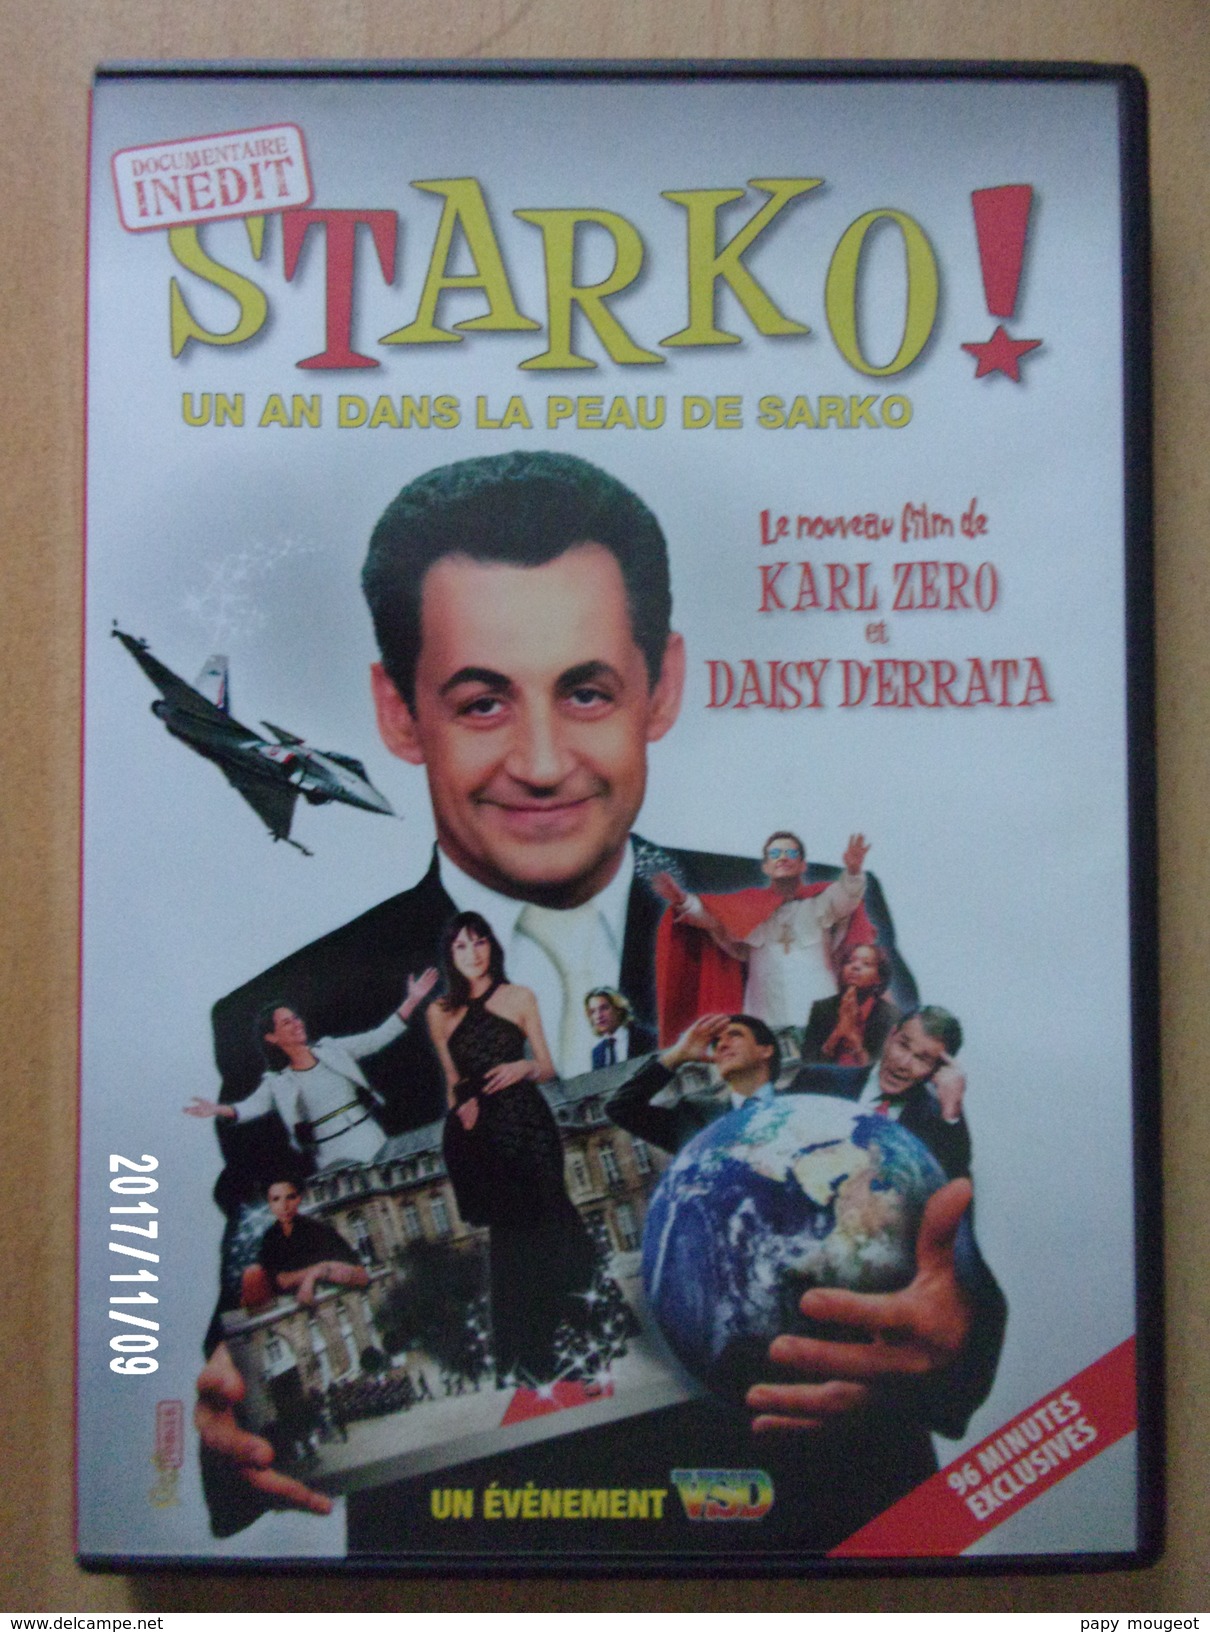 Starko - Documentary